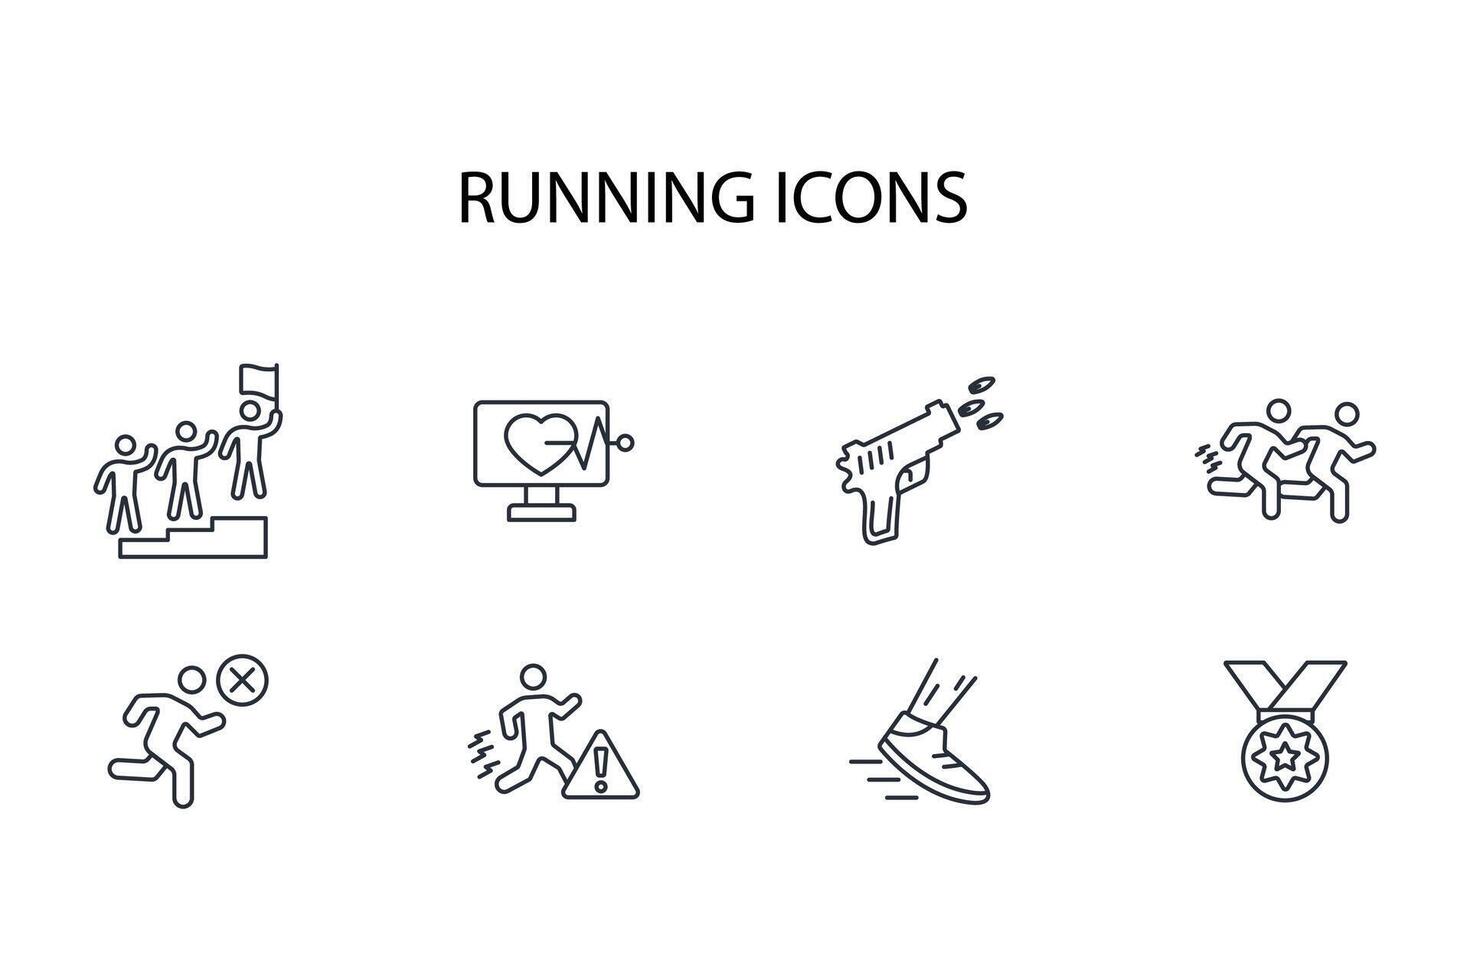 running icon set..Editable stroke.linear style sign for use web design,logo.Symbol illustration. vector